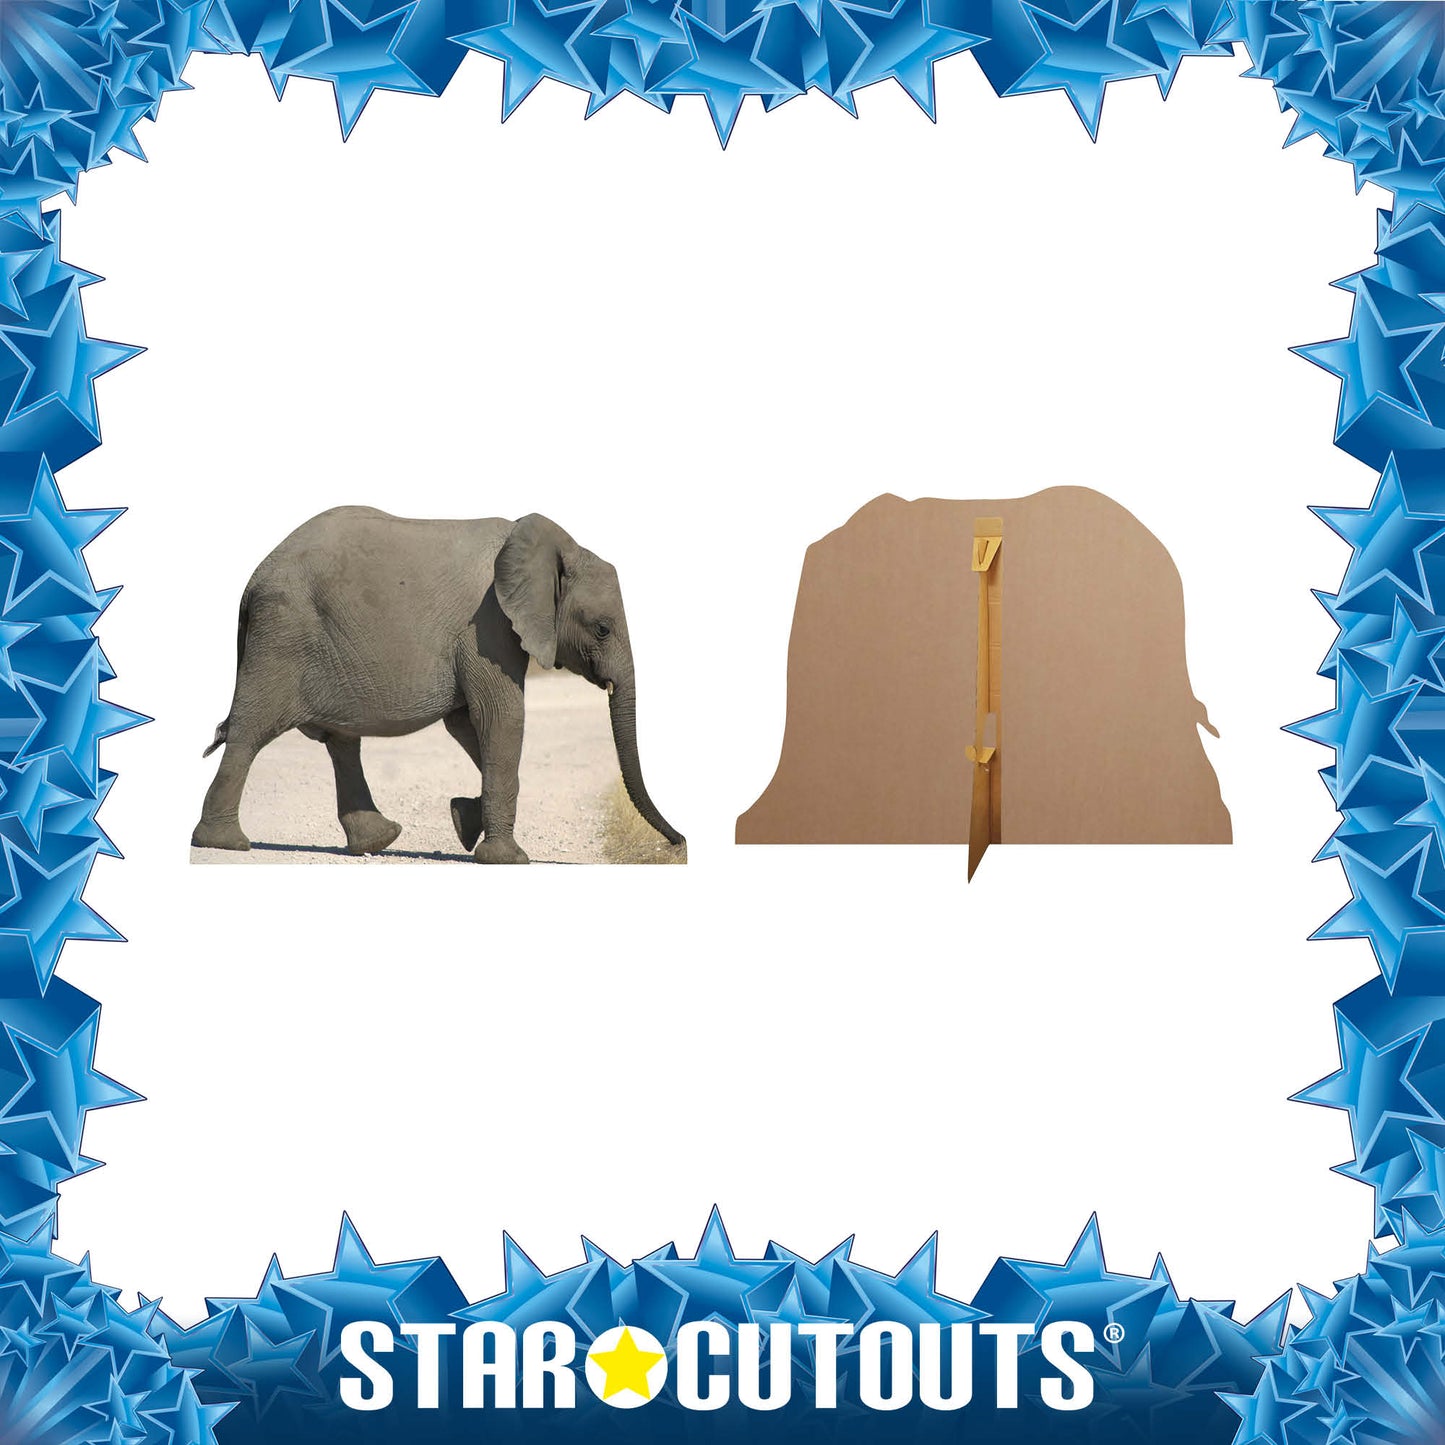 Baby Elephant Jungle Safari Theme Animal Cardboard Cutout